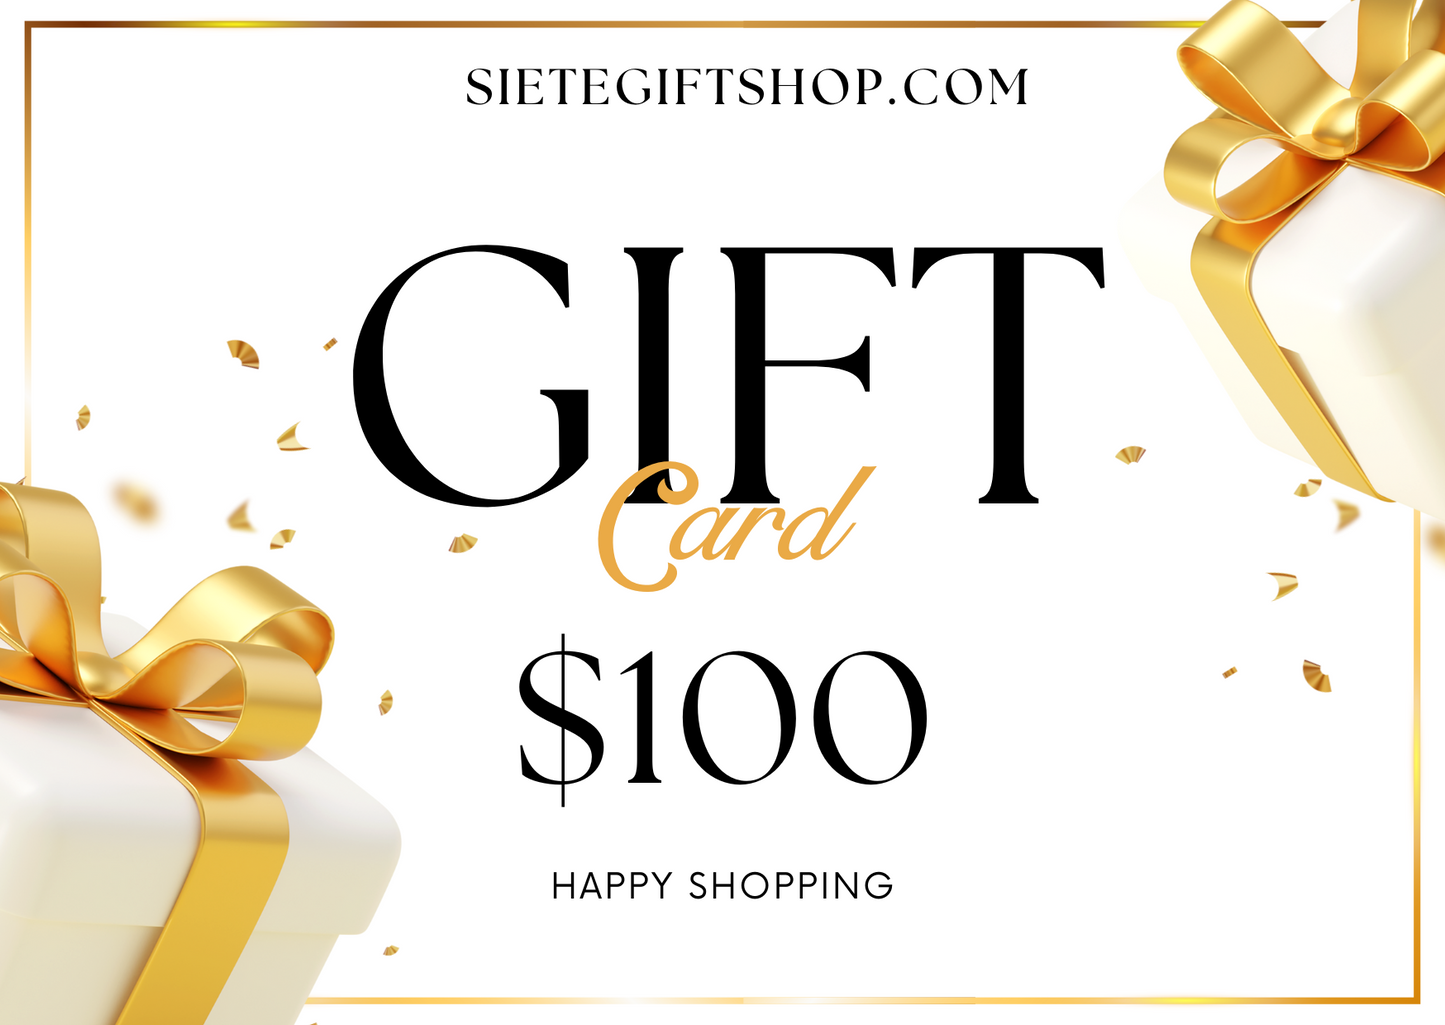 Siete Gift Shop - Gift Card